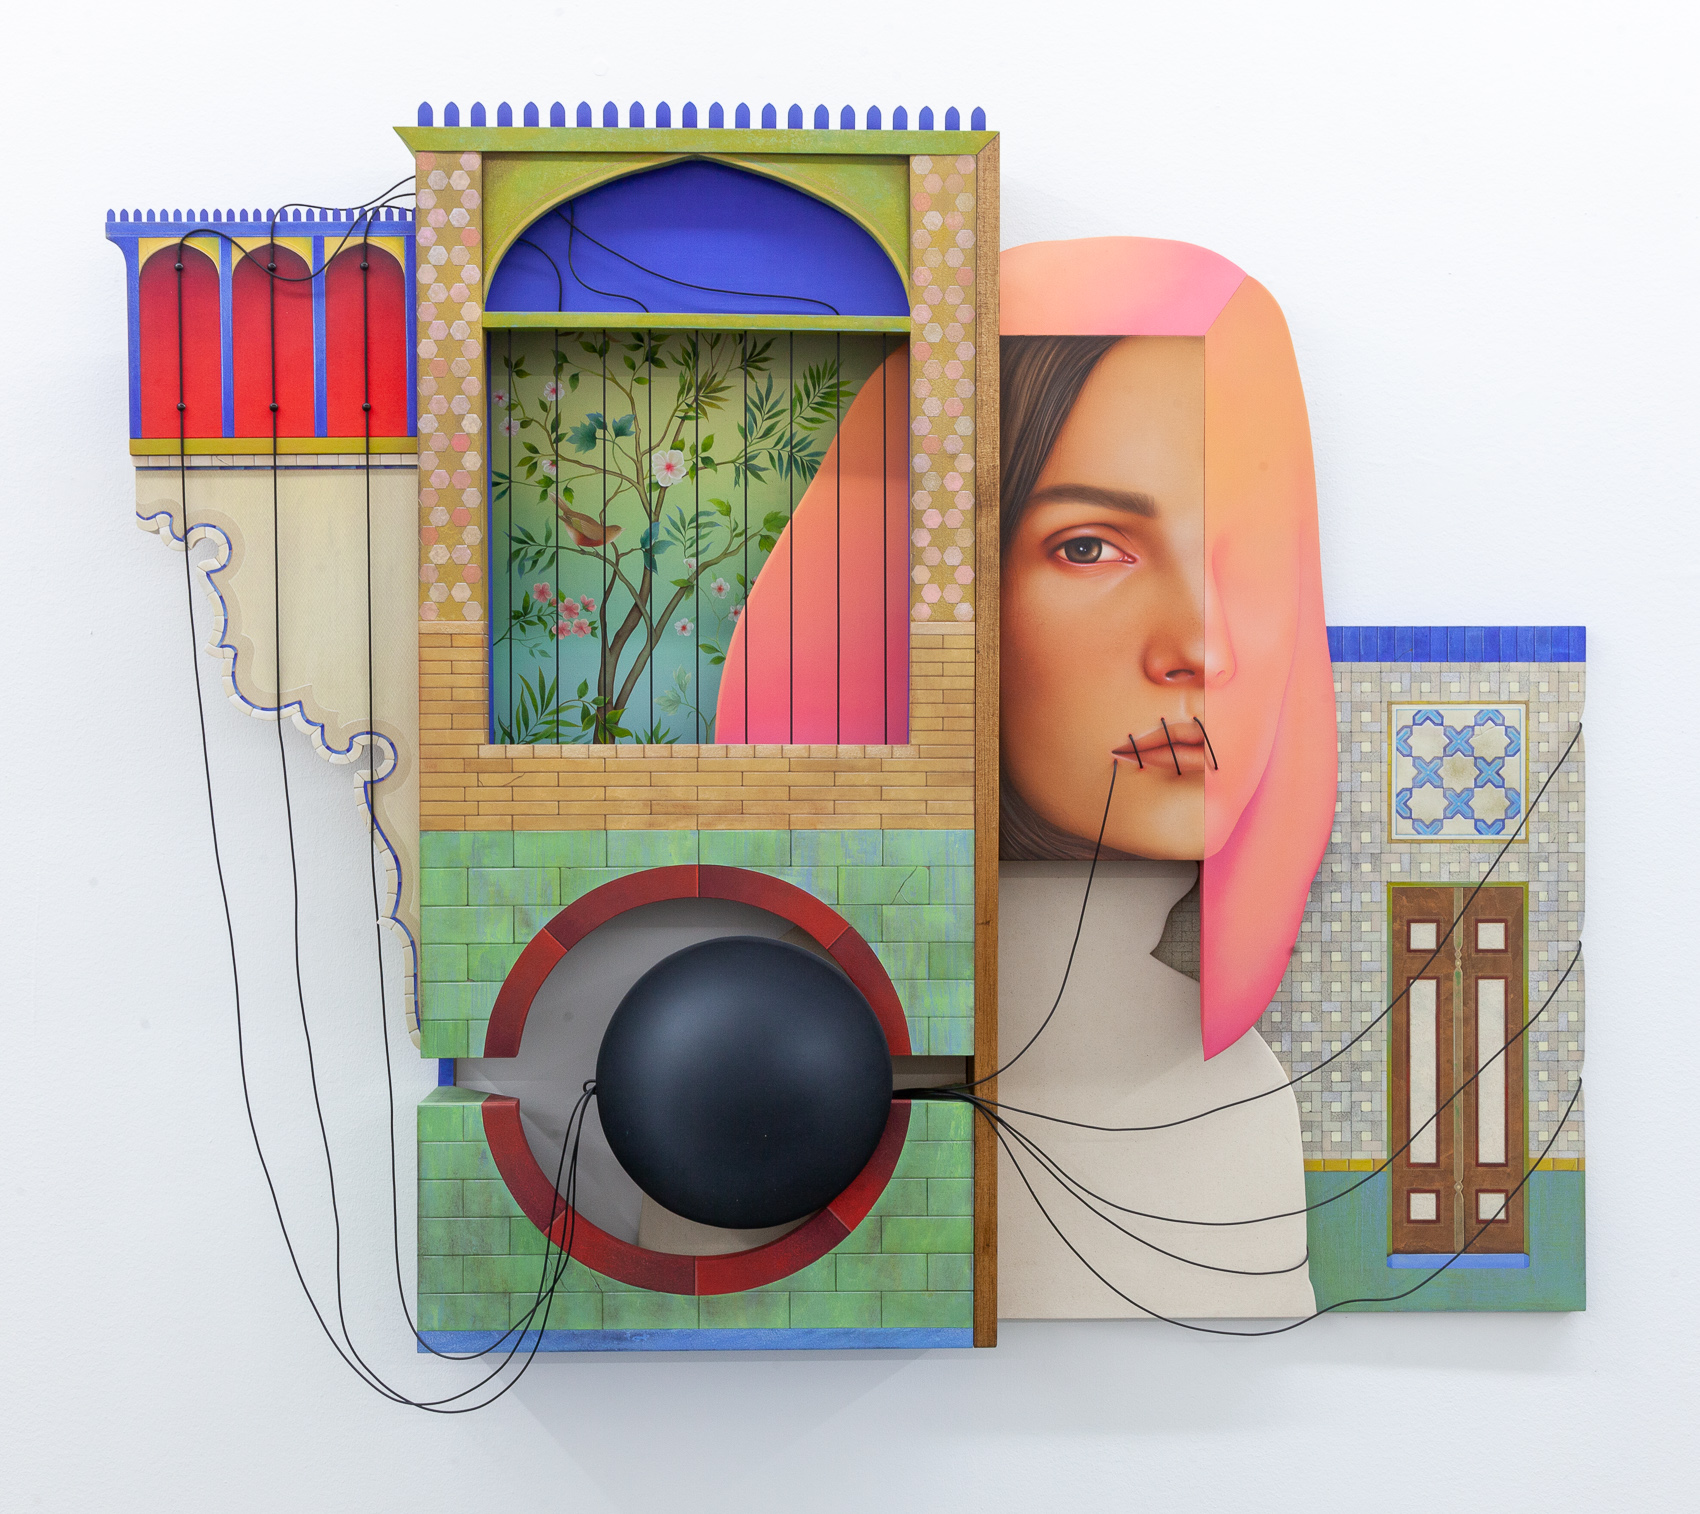 Featured image: Arghavan Khosravi, The Garden, 2022, acrylic on canvas mounted on shaped wood